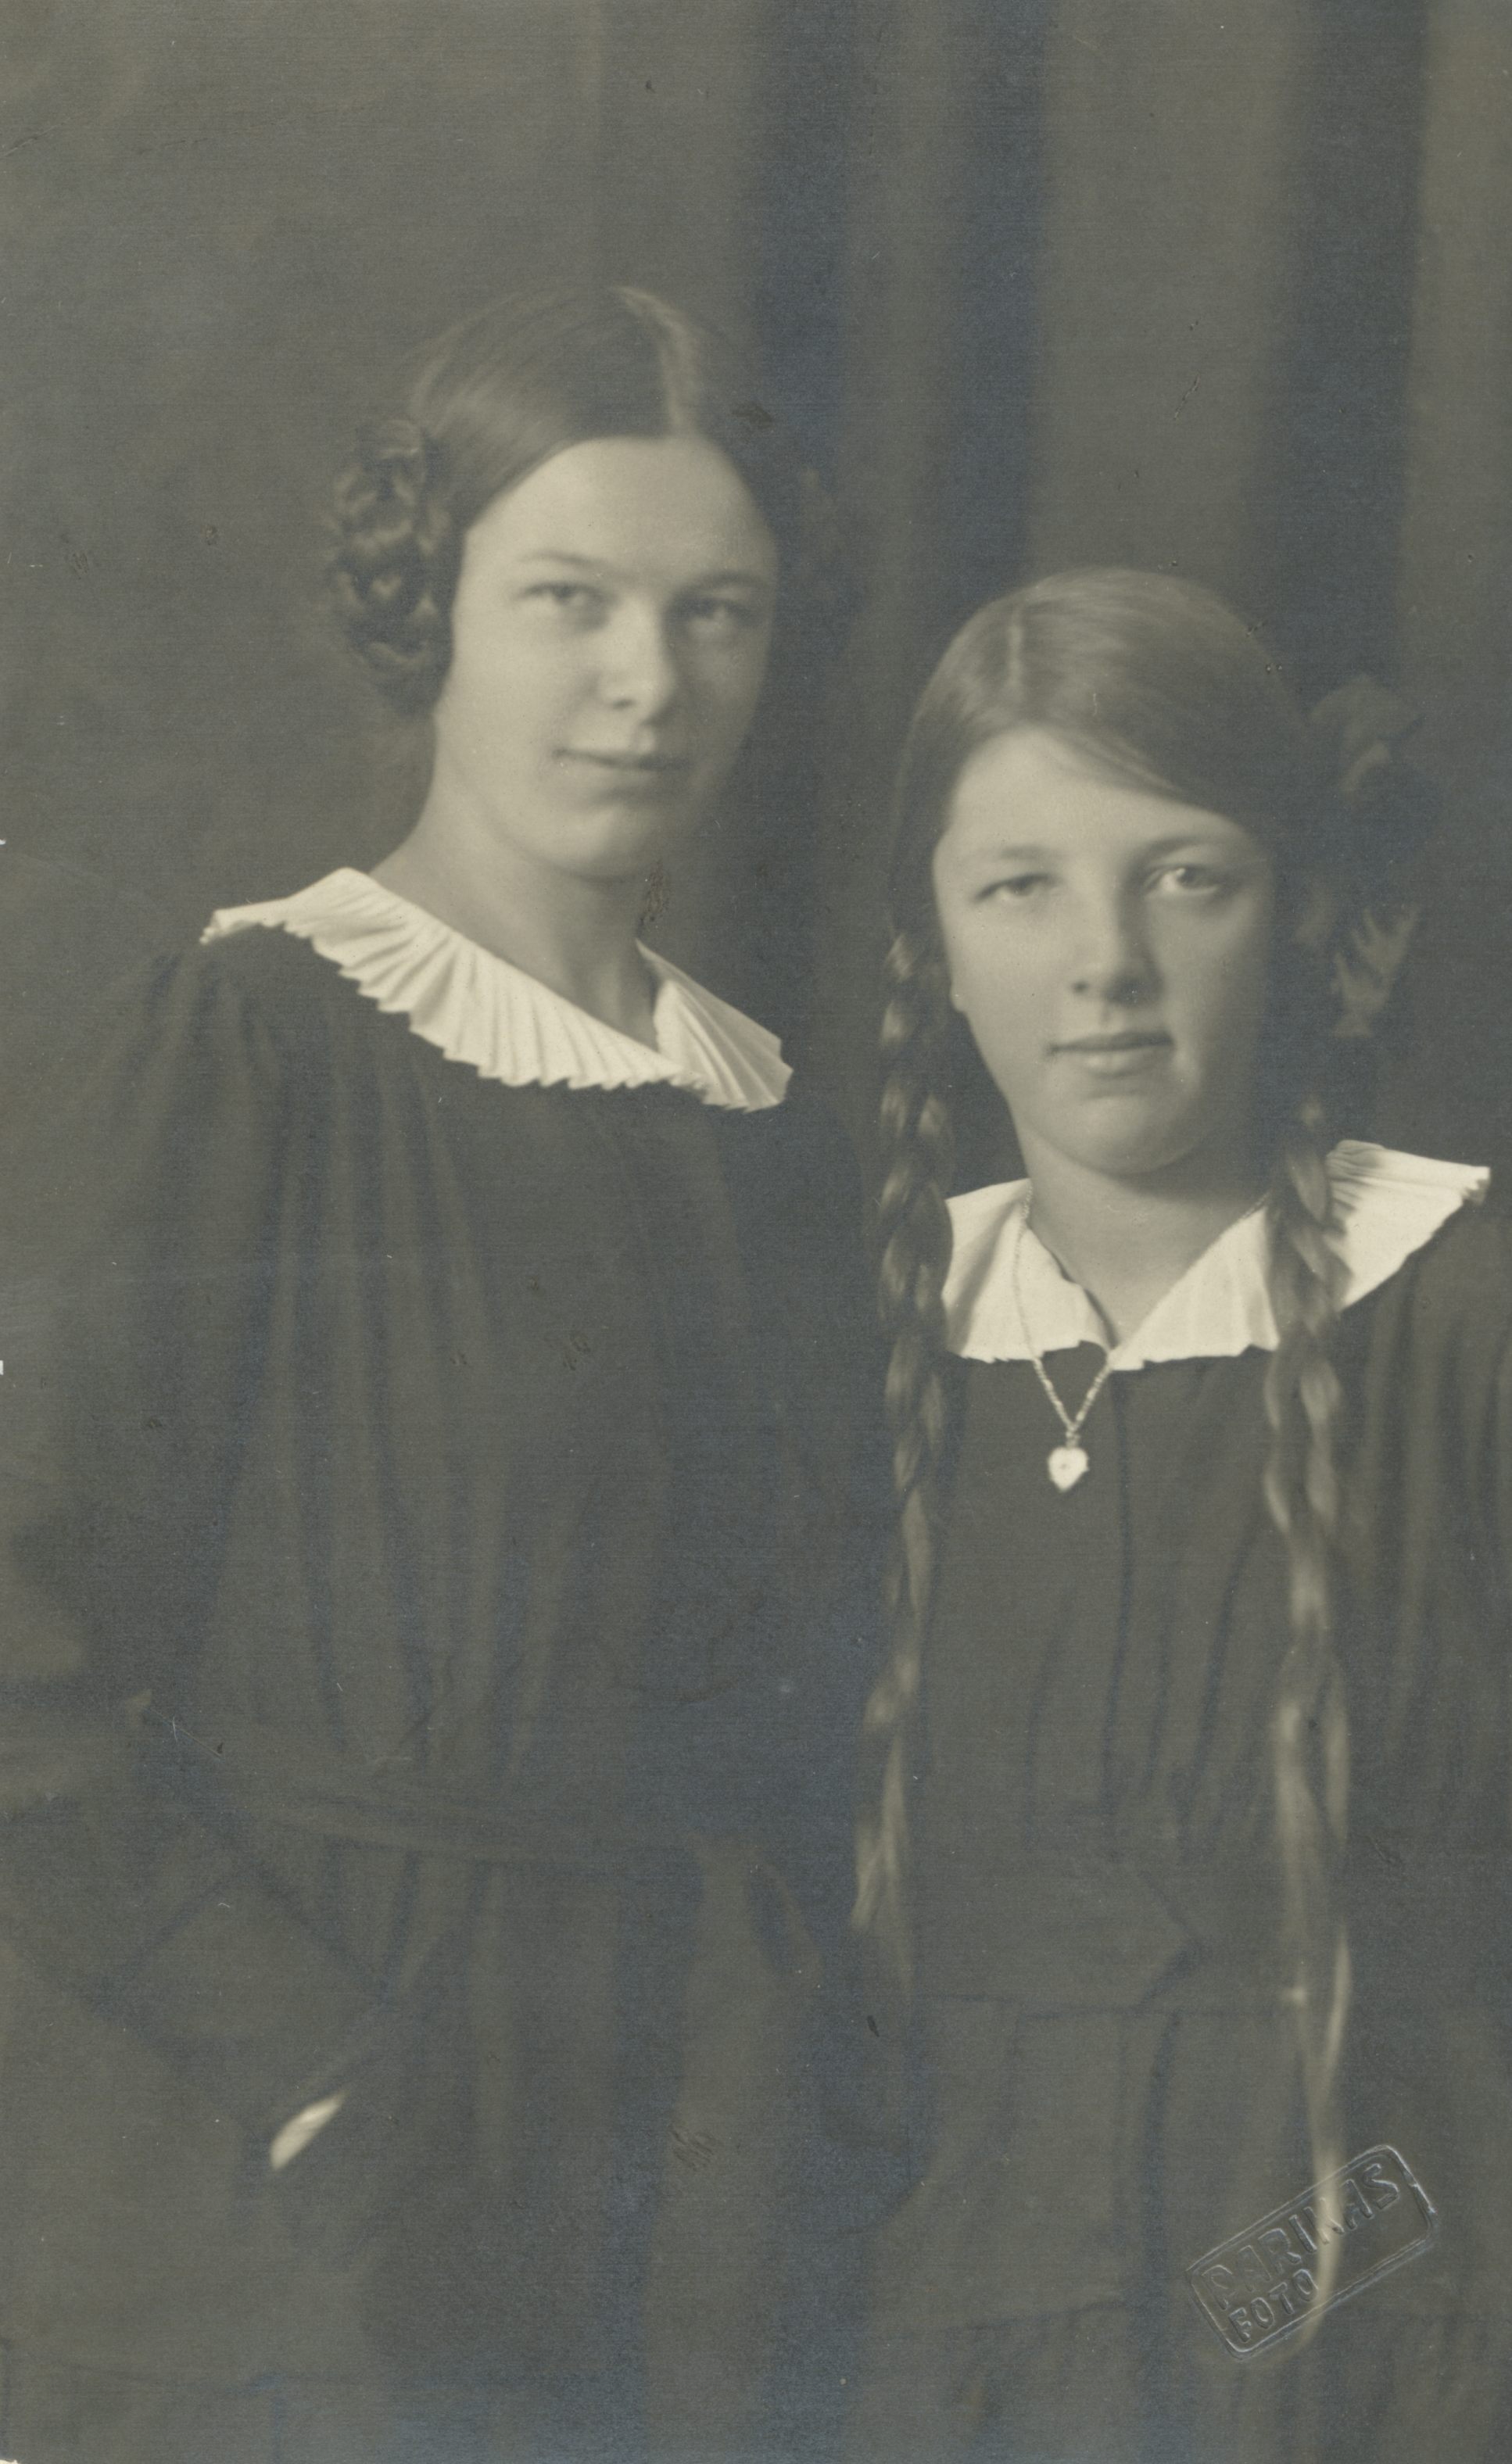 Marie Under's daughters Dagmar and Hedda Hacker Lender's gümn. As students